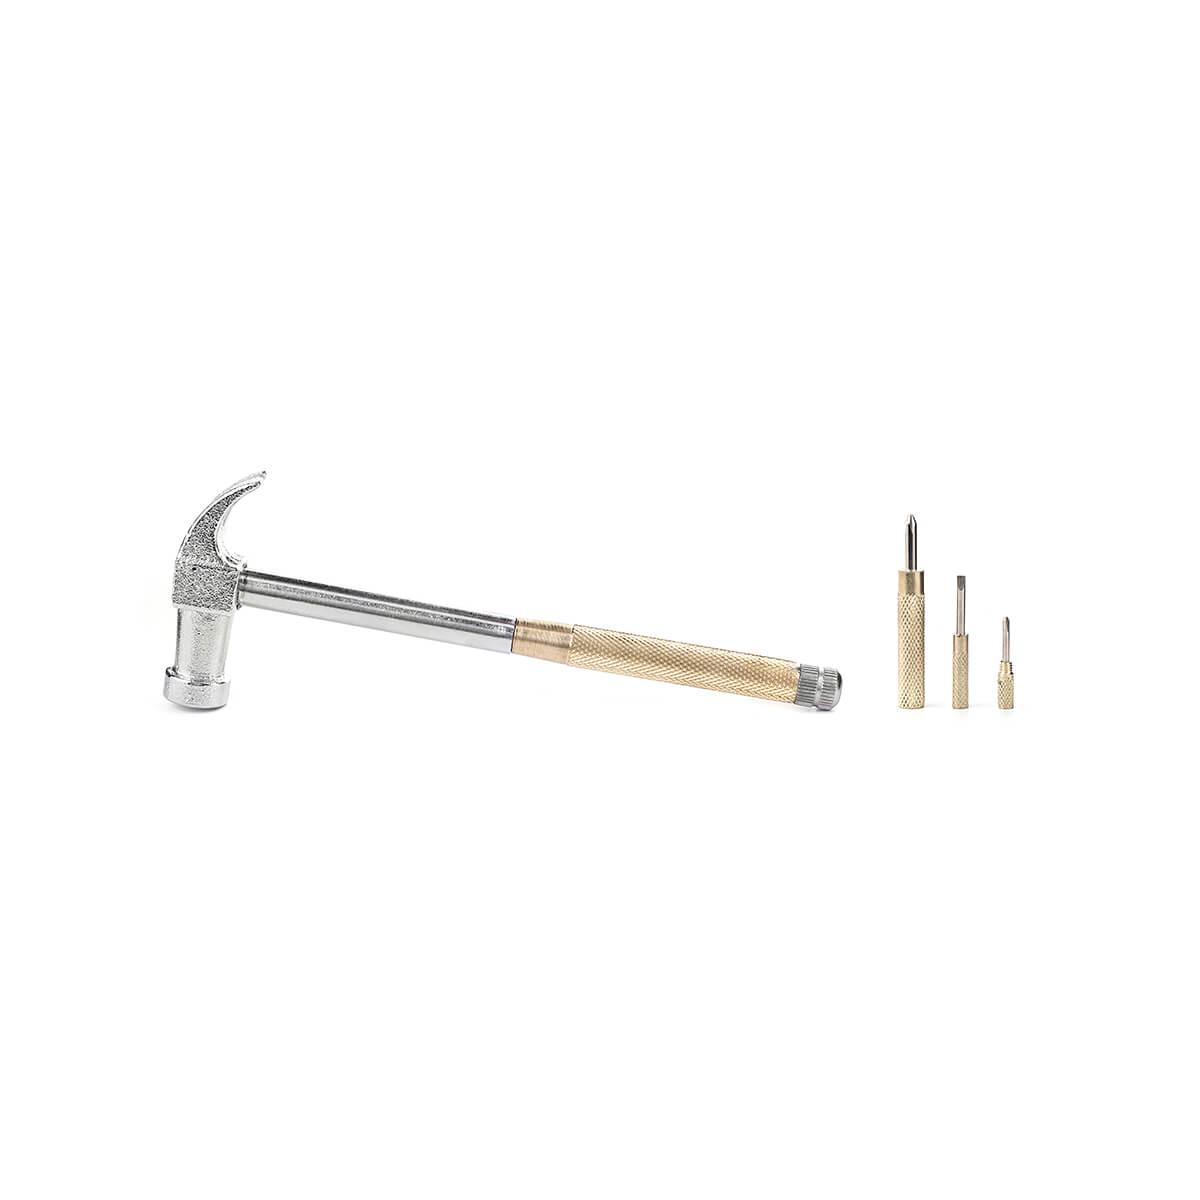 Super Grip Replacement Screws (KeySmart® Tools)